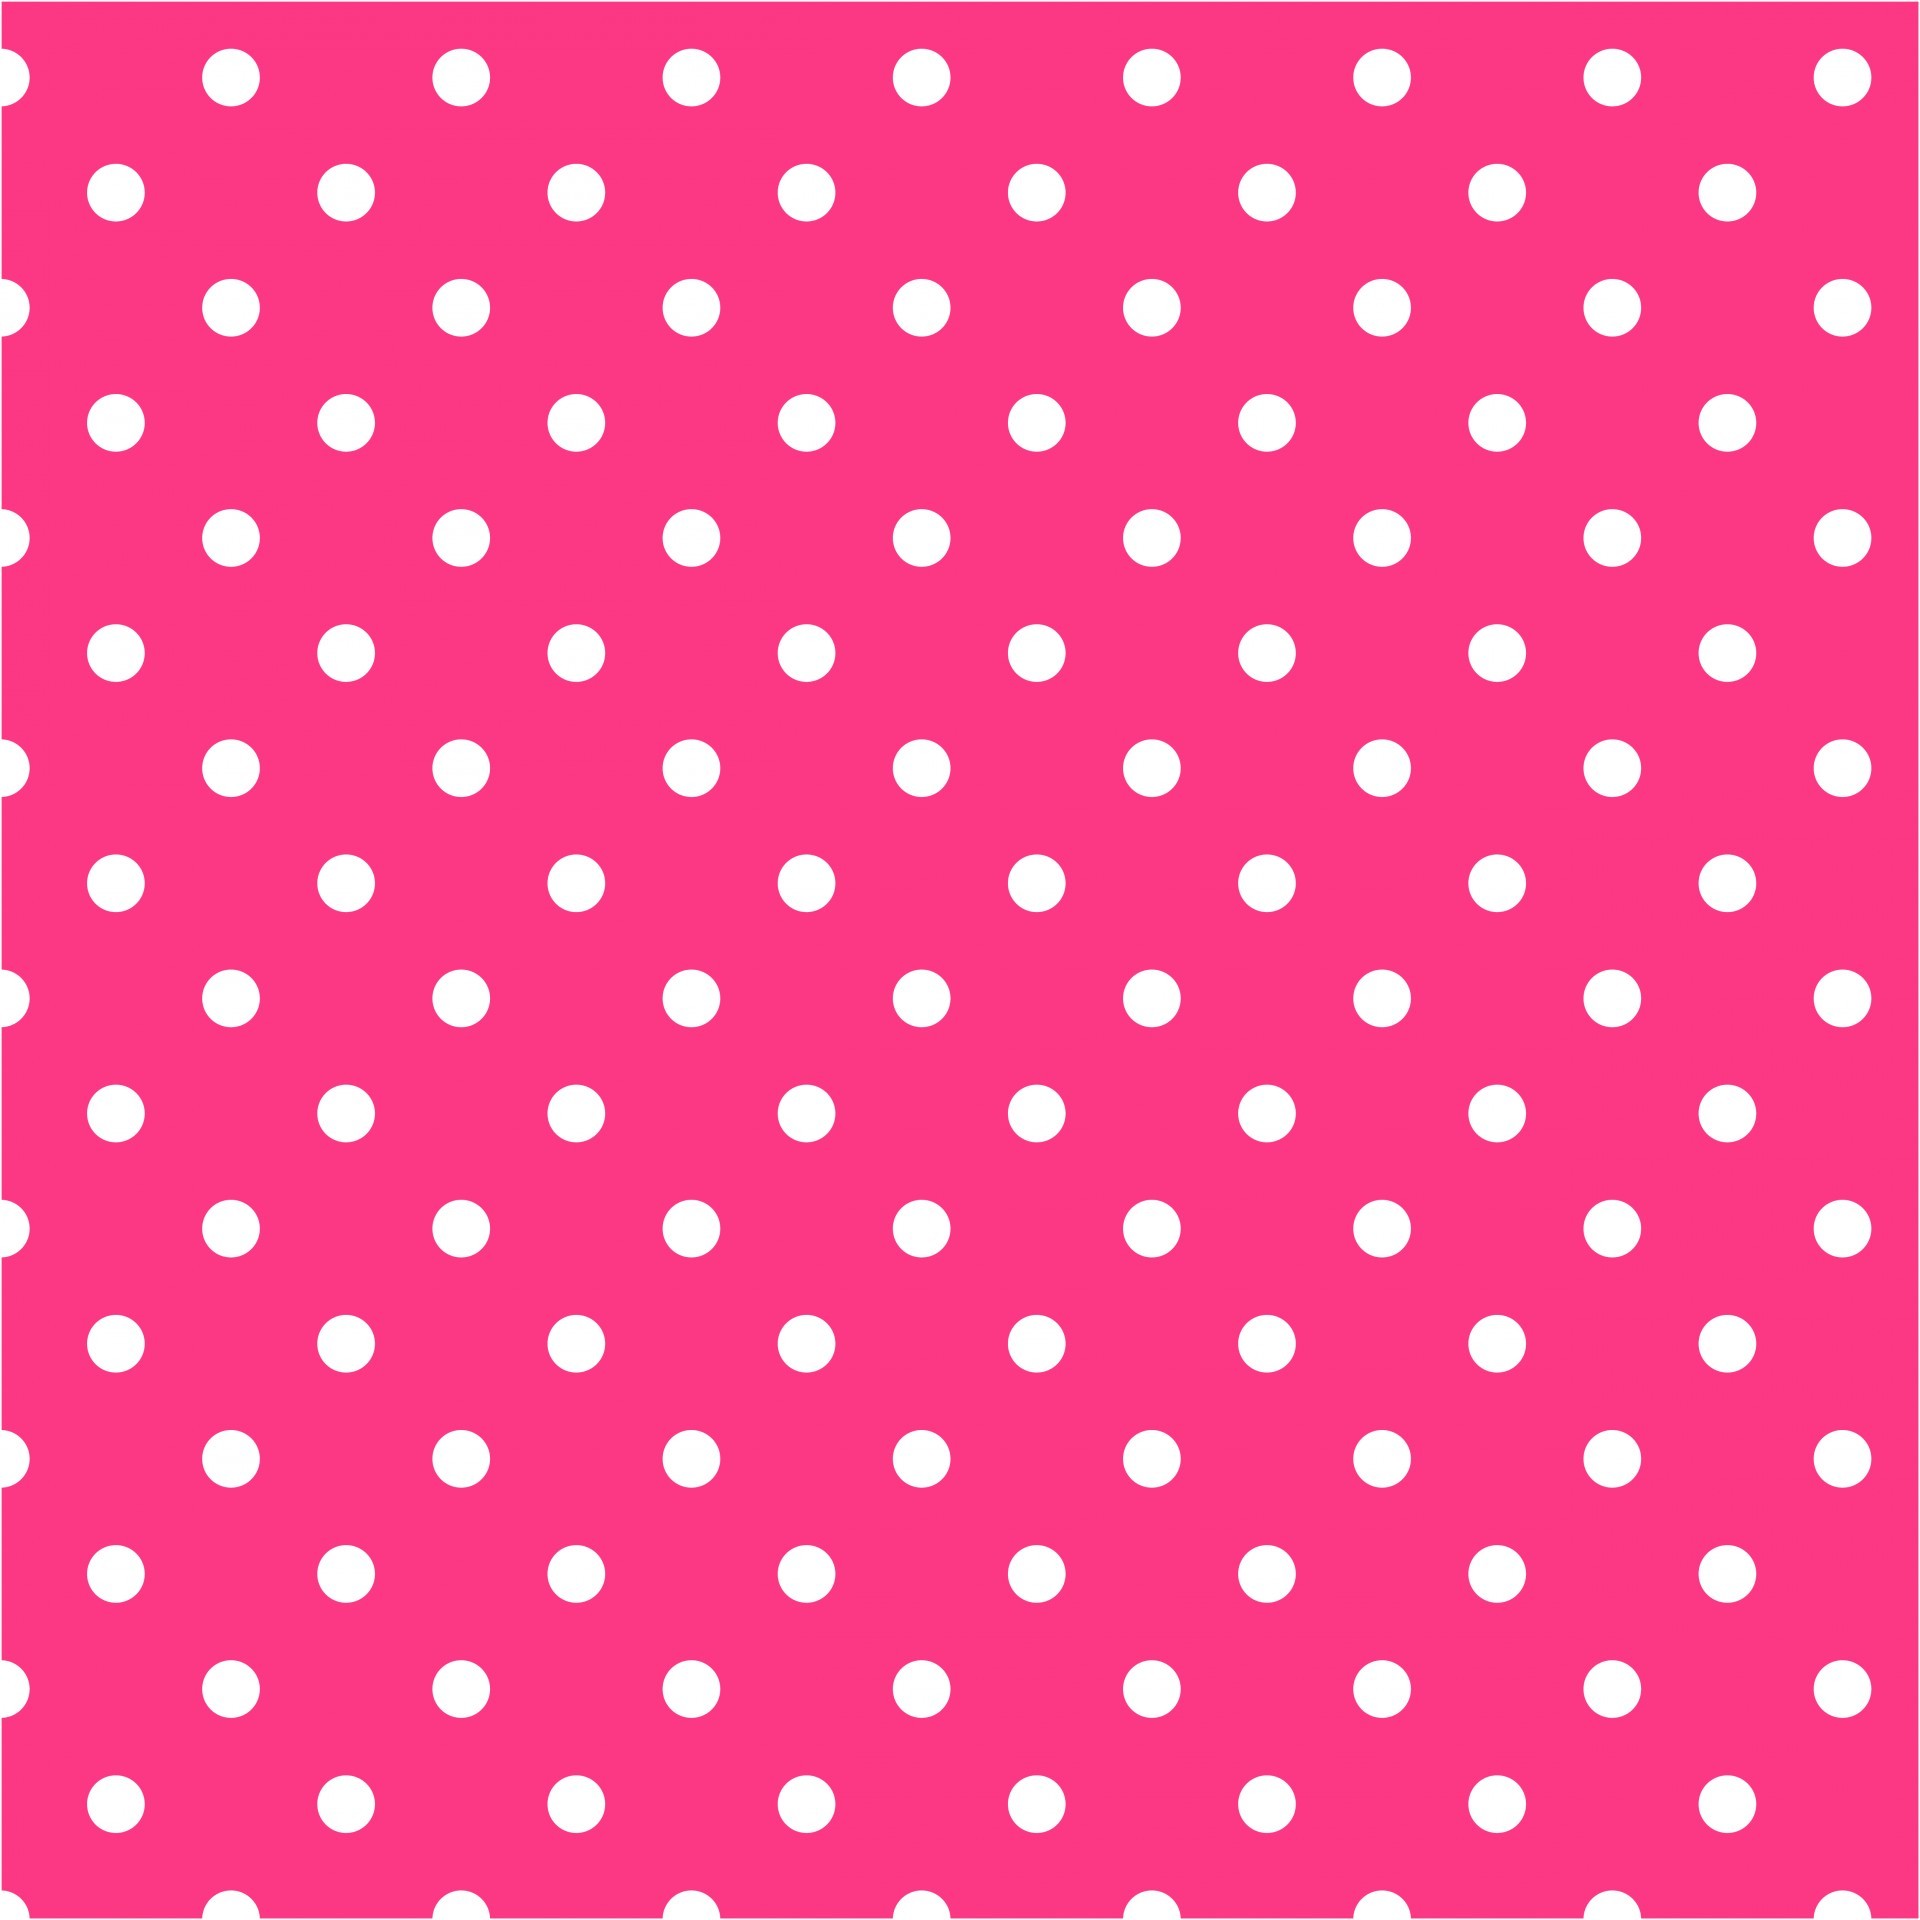 1920x1920 Polka Dot Wallpaper Pink